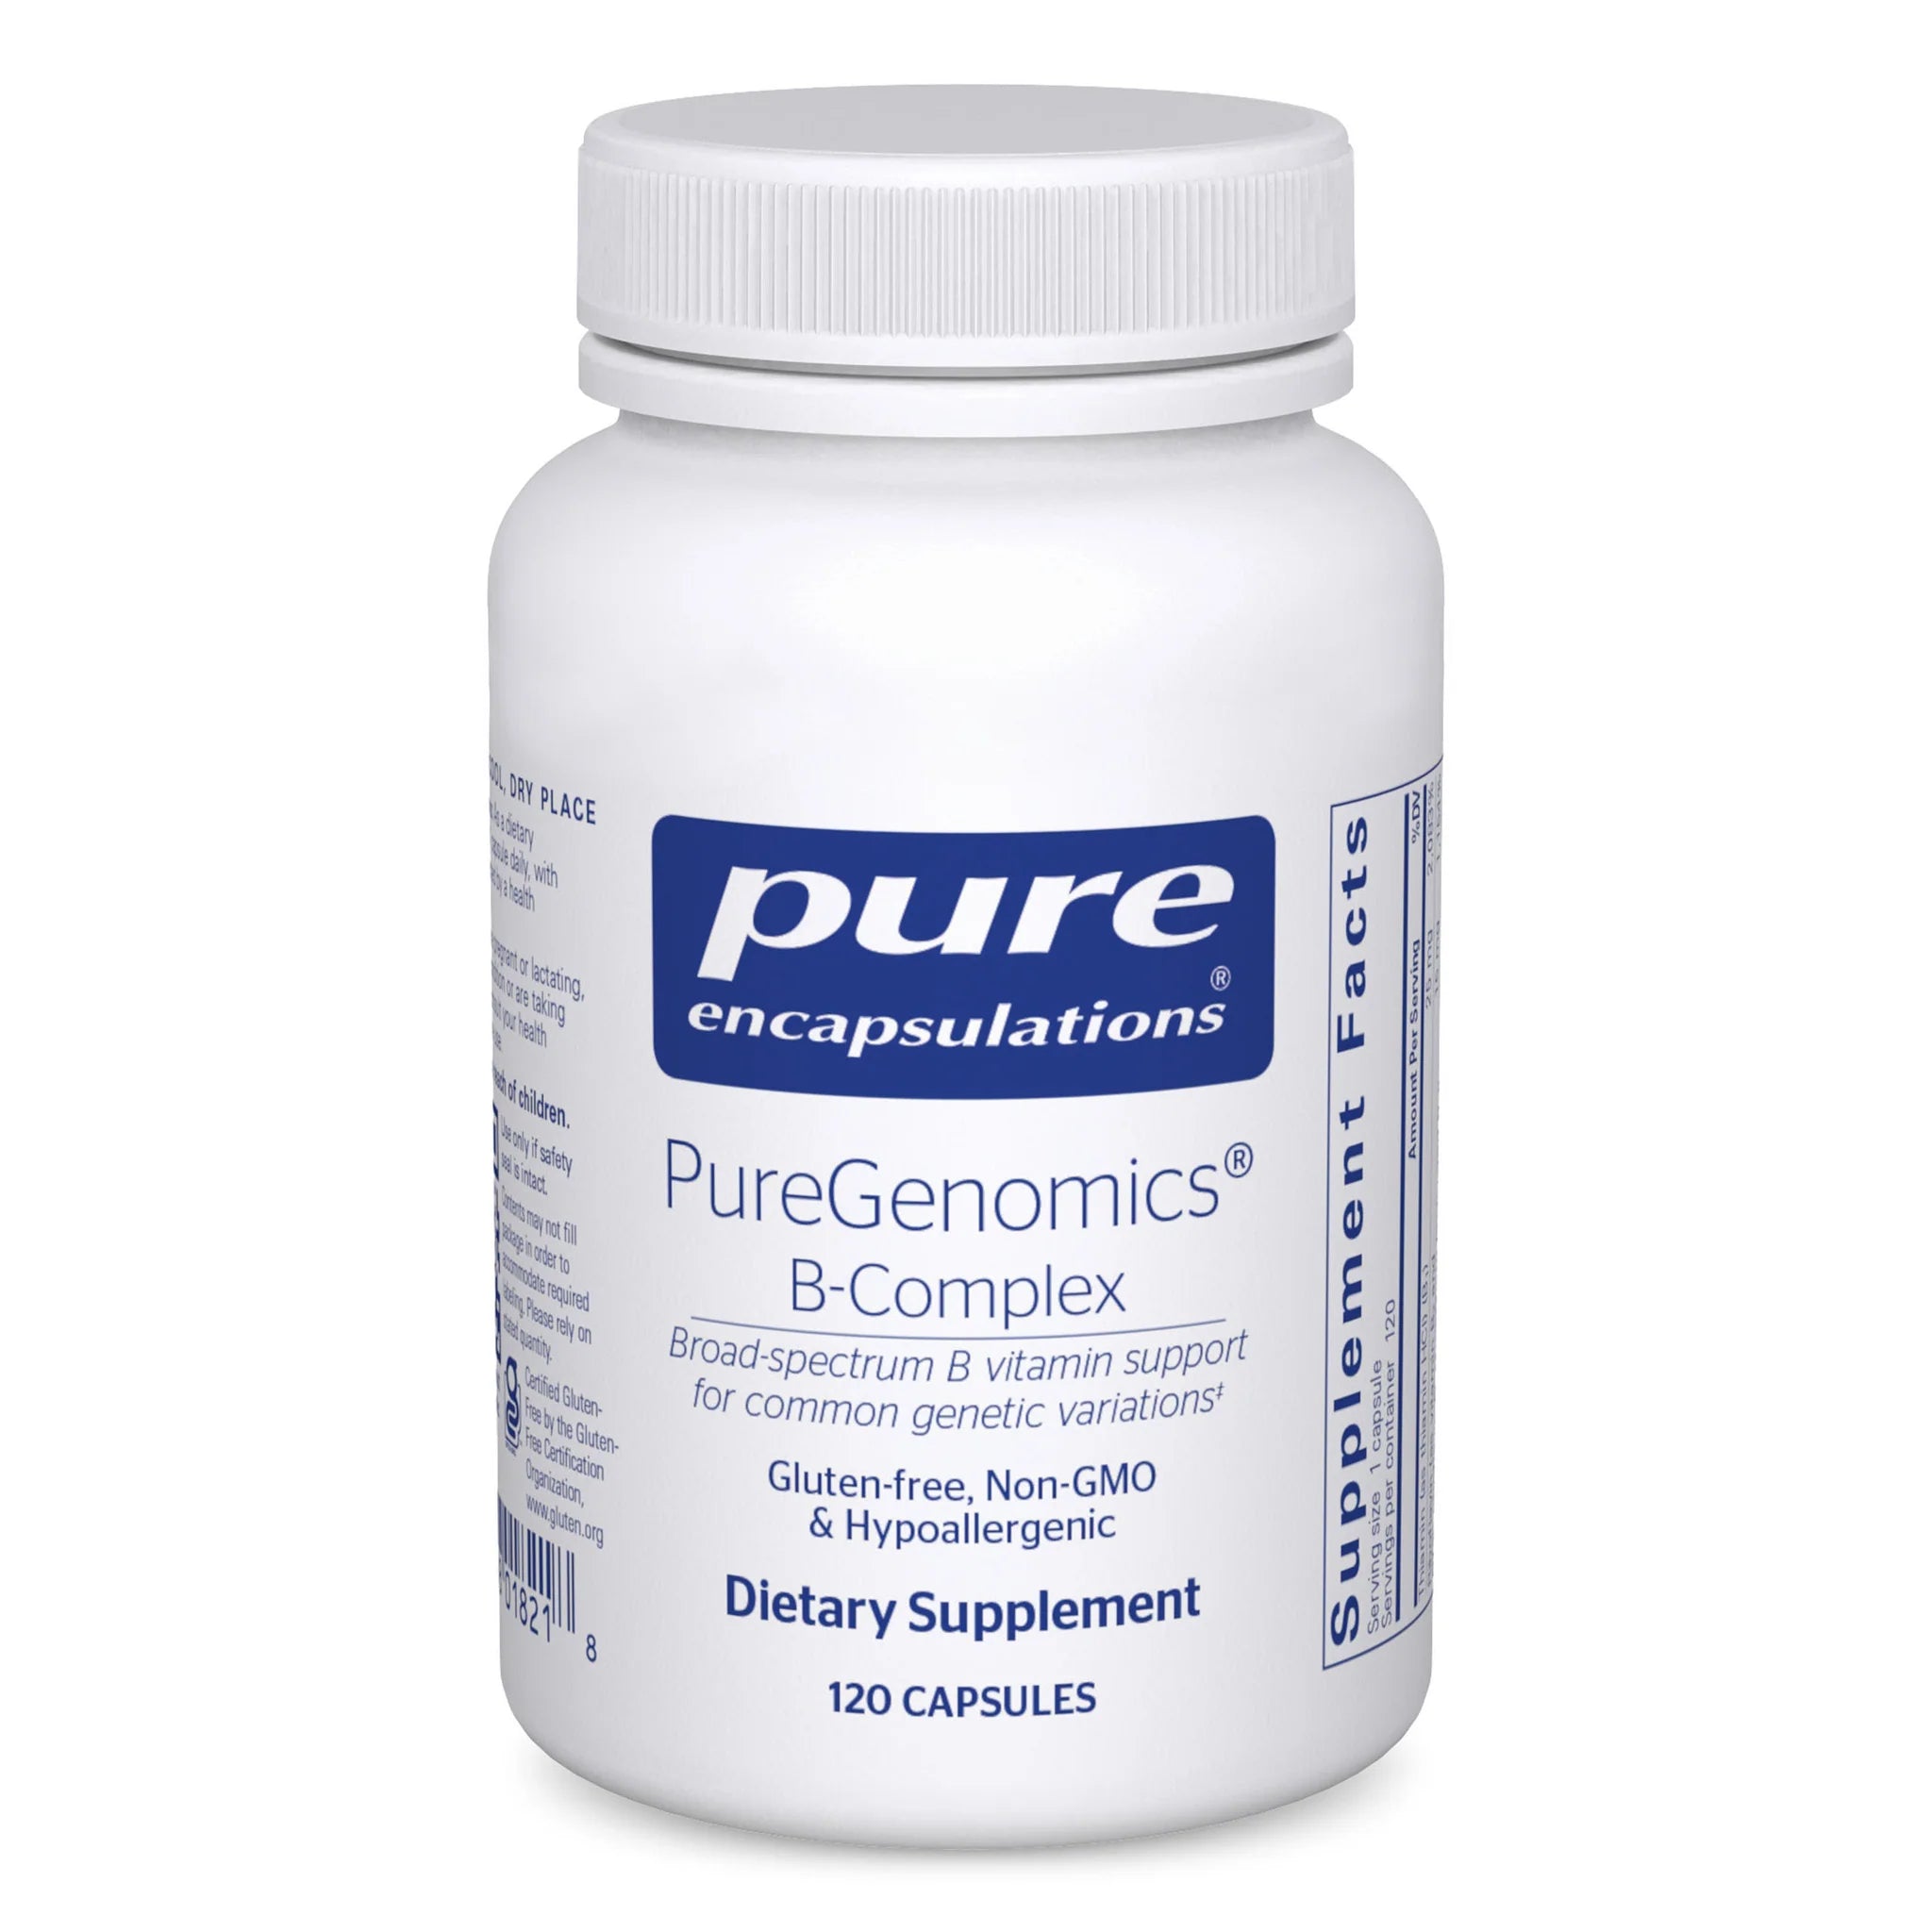 PureGenomics® B-Complex